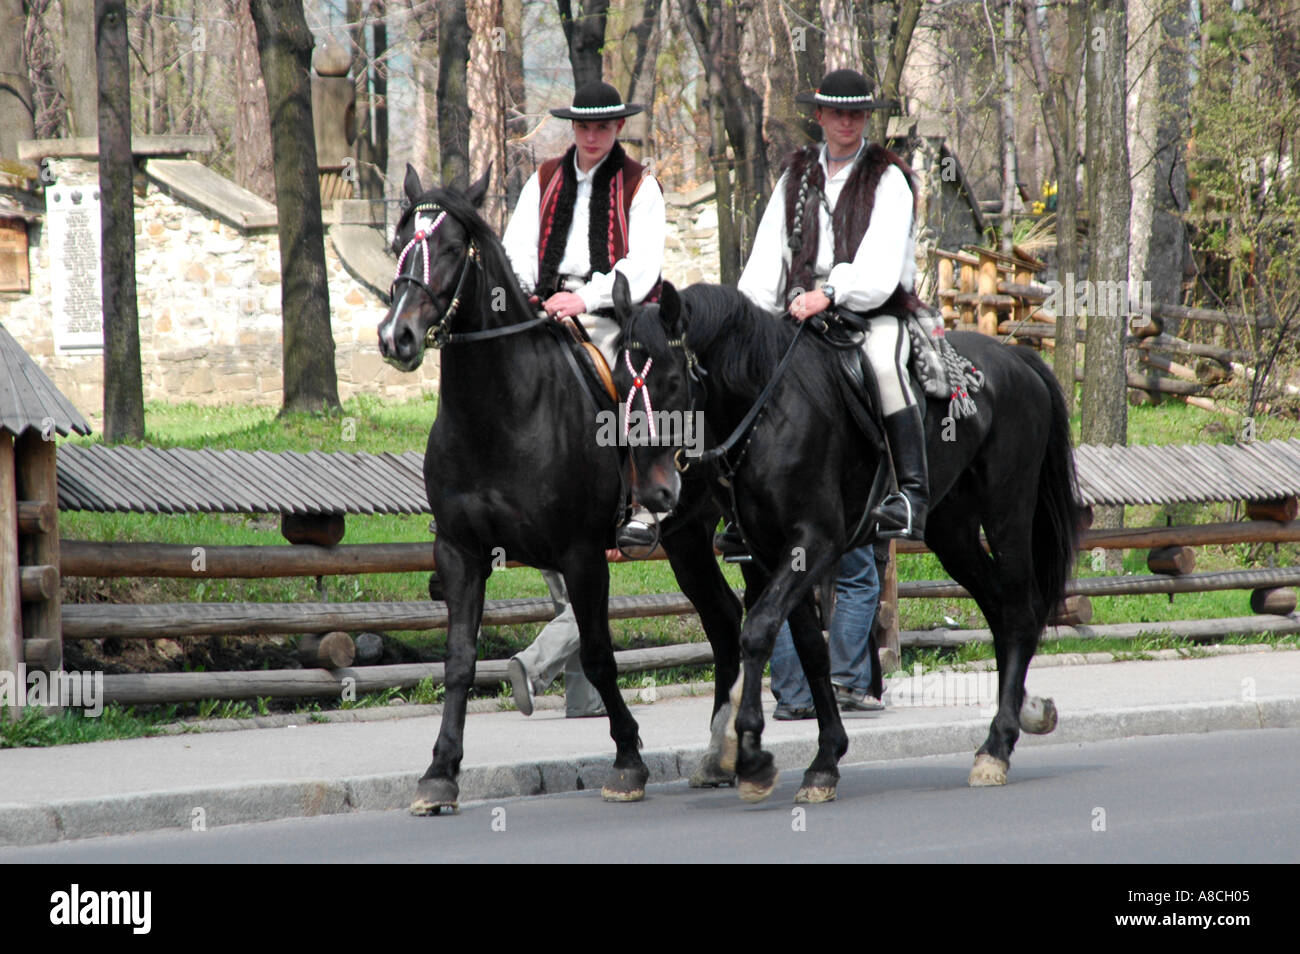 Polish highlanders wearing traditional clothes riding horses in Zakopane Stock Photo